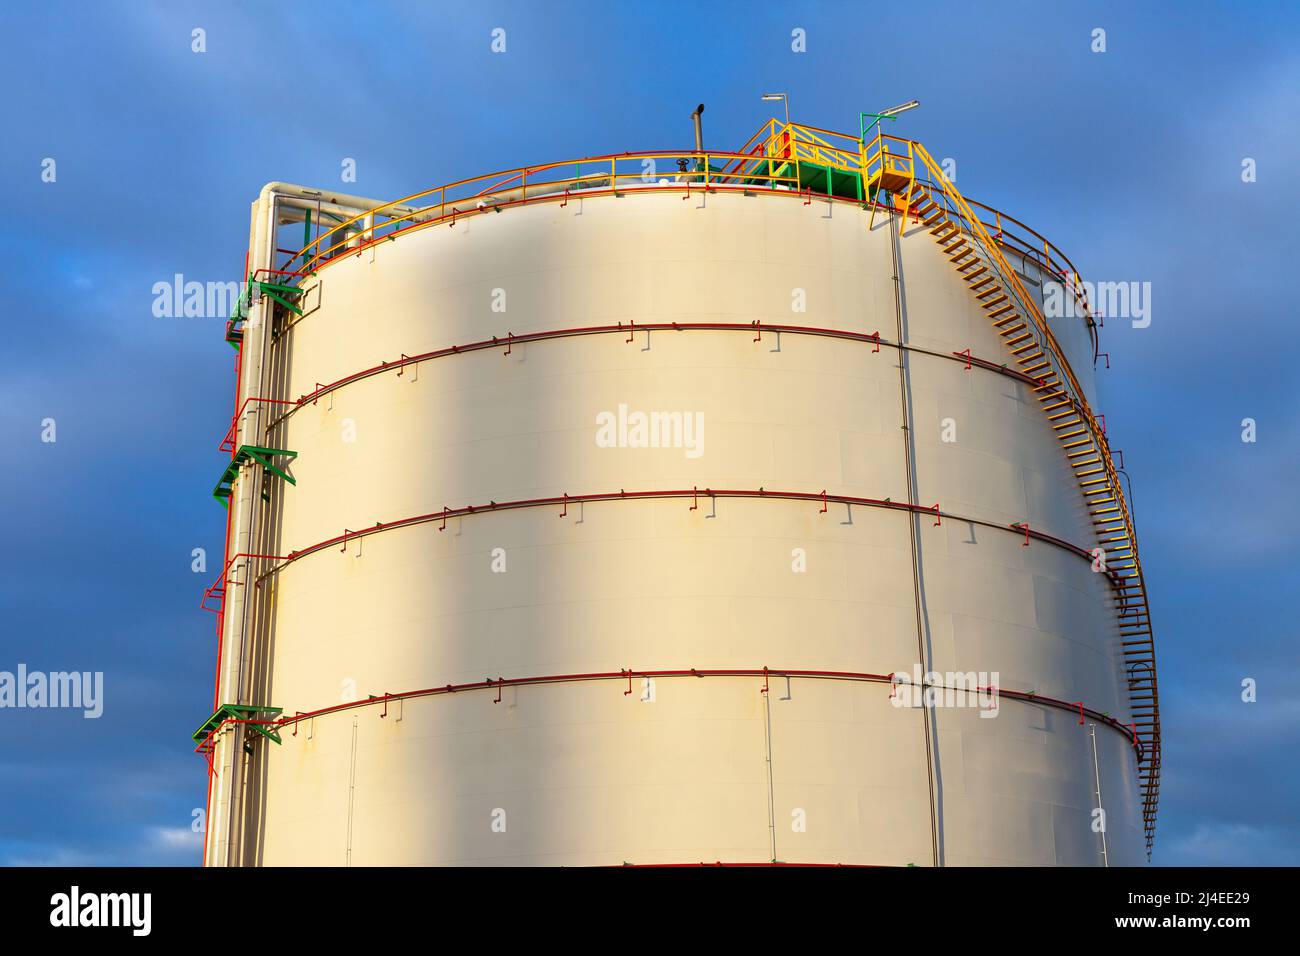 Storage tank of a gas refinery plant. Stock Photo